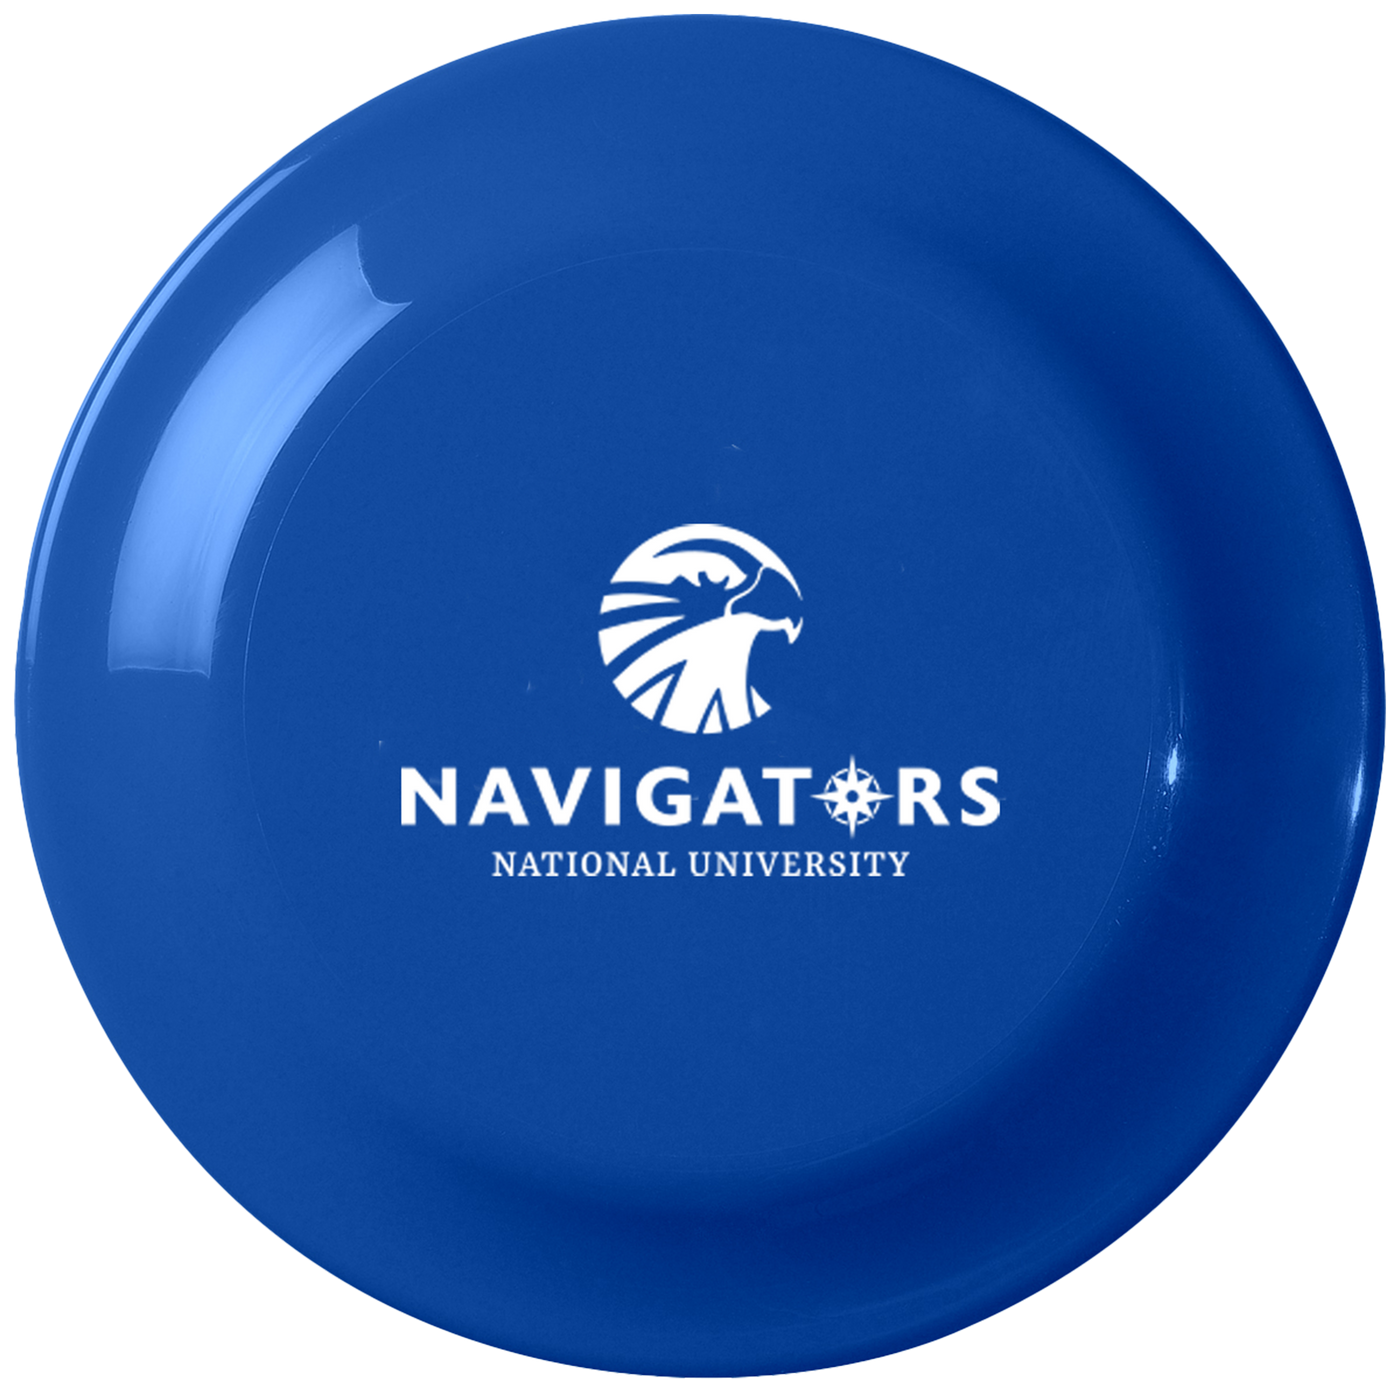 Large Discus Frisbee - Navigators